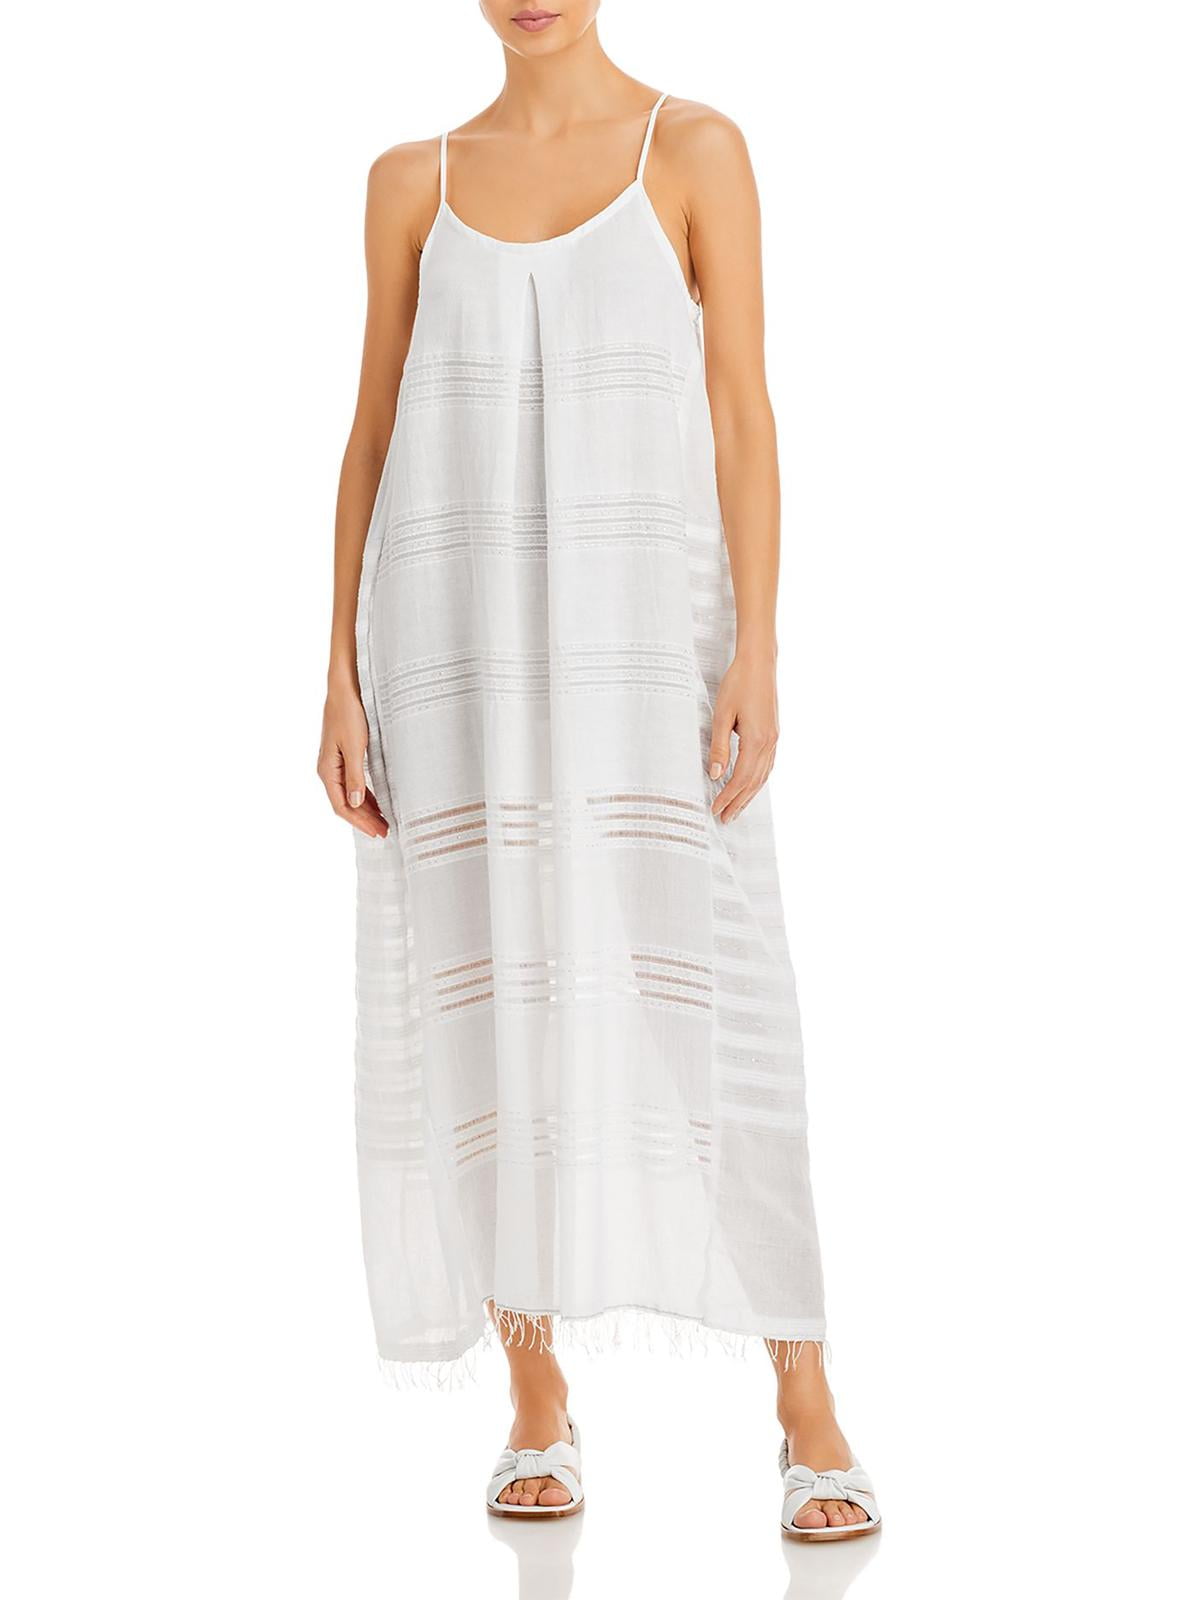 lemlem by Liya Kebede Womens Cotton Dress Cover-Up - Walmart.com